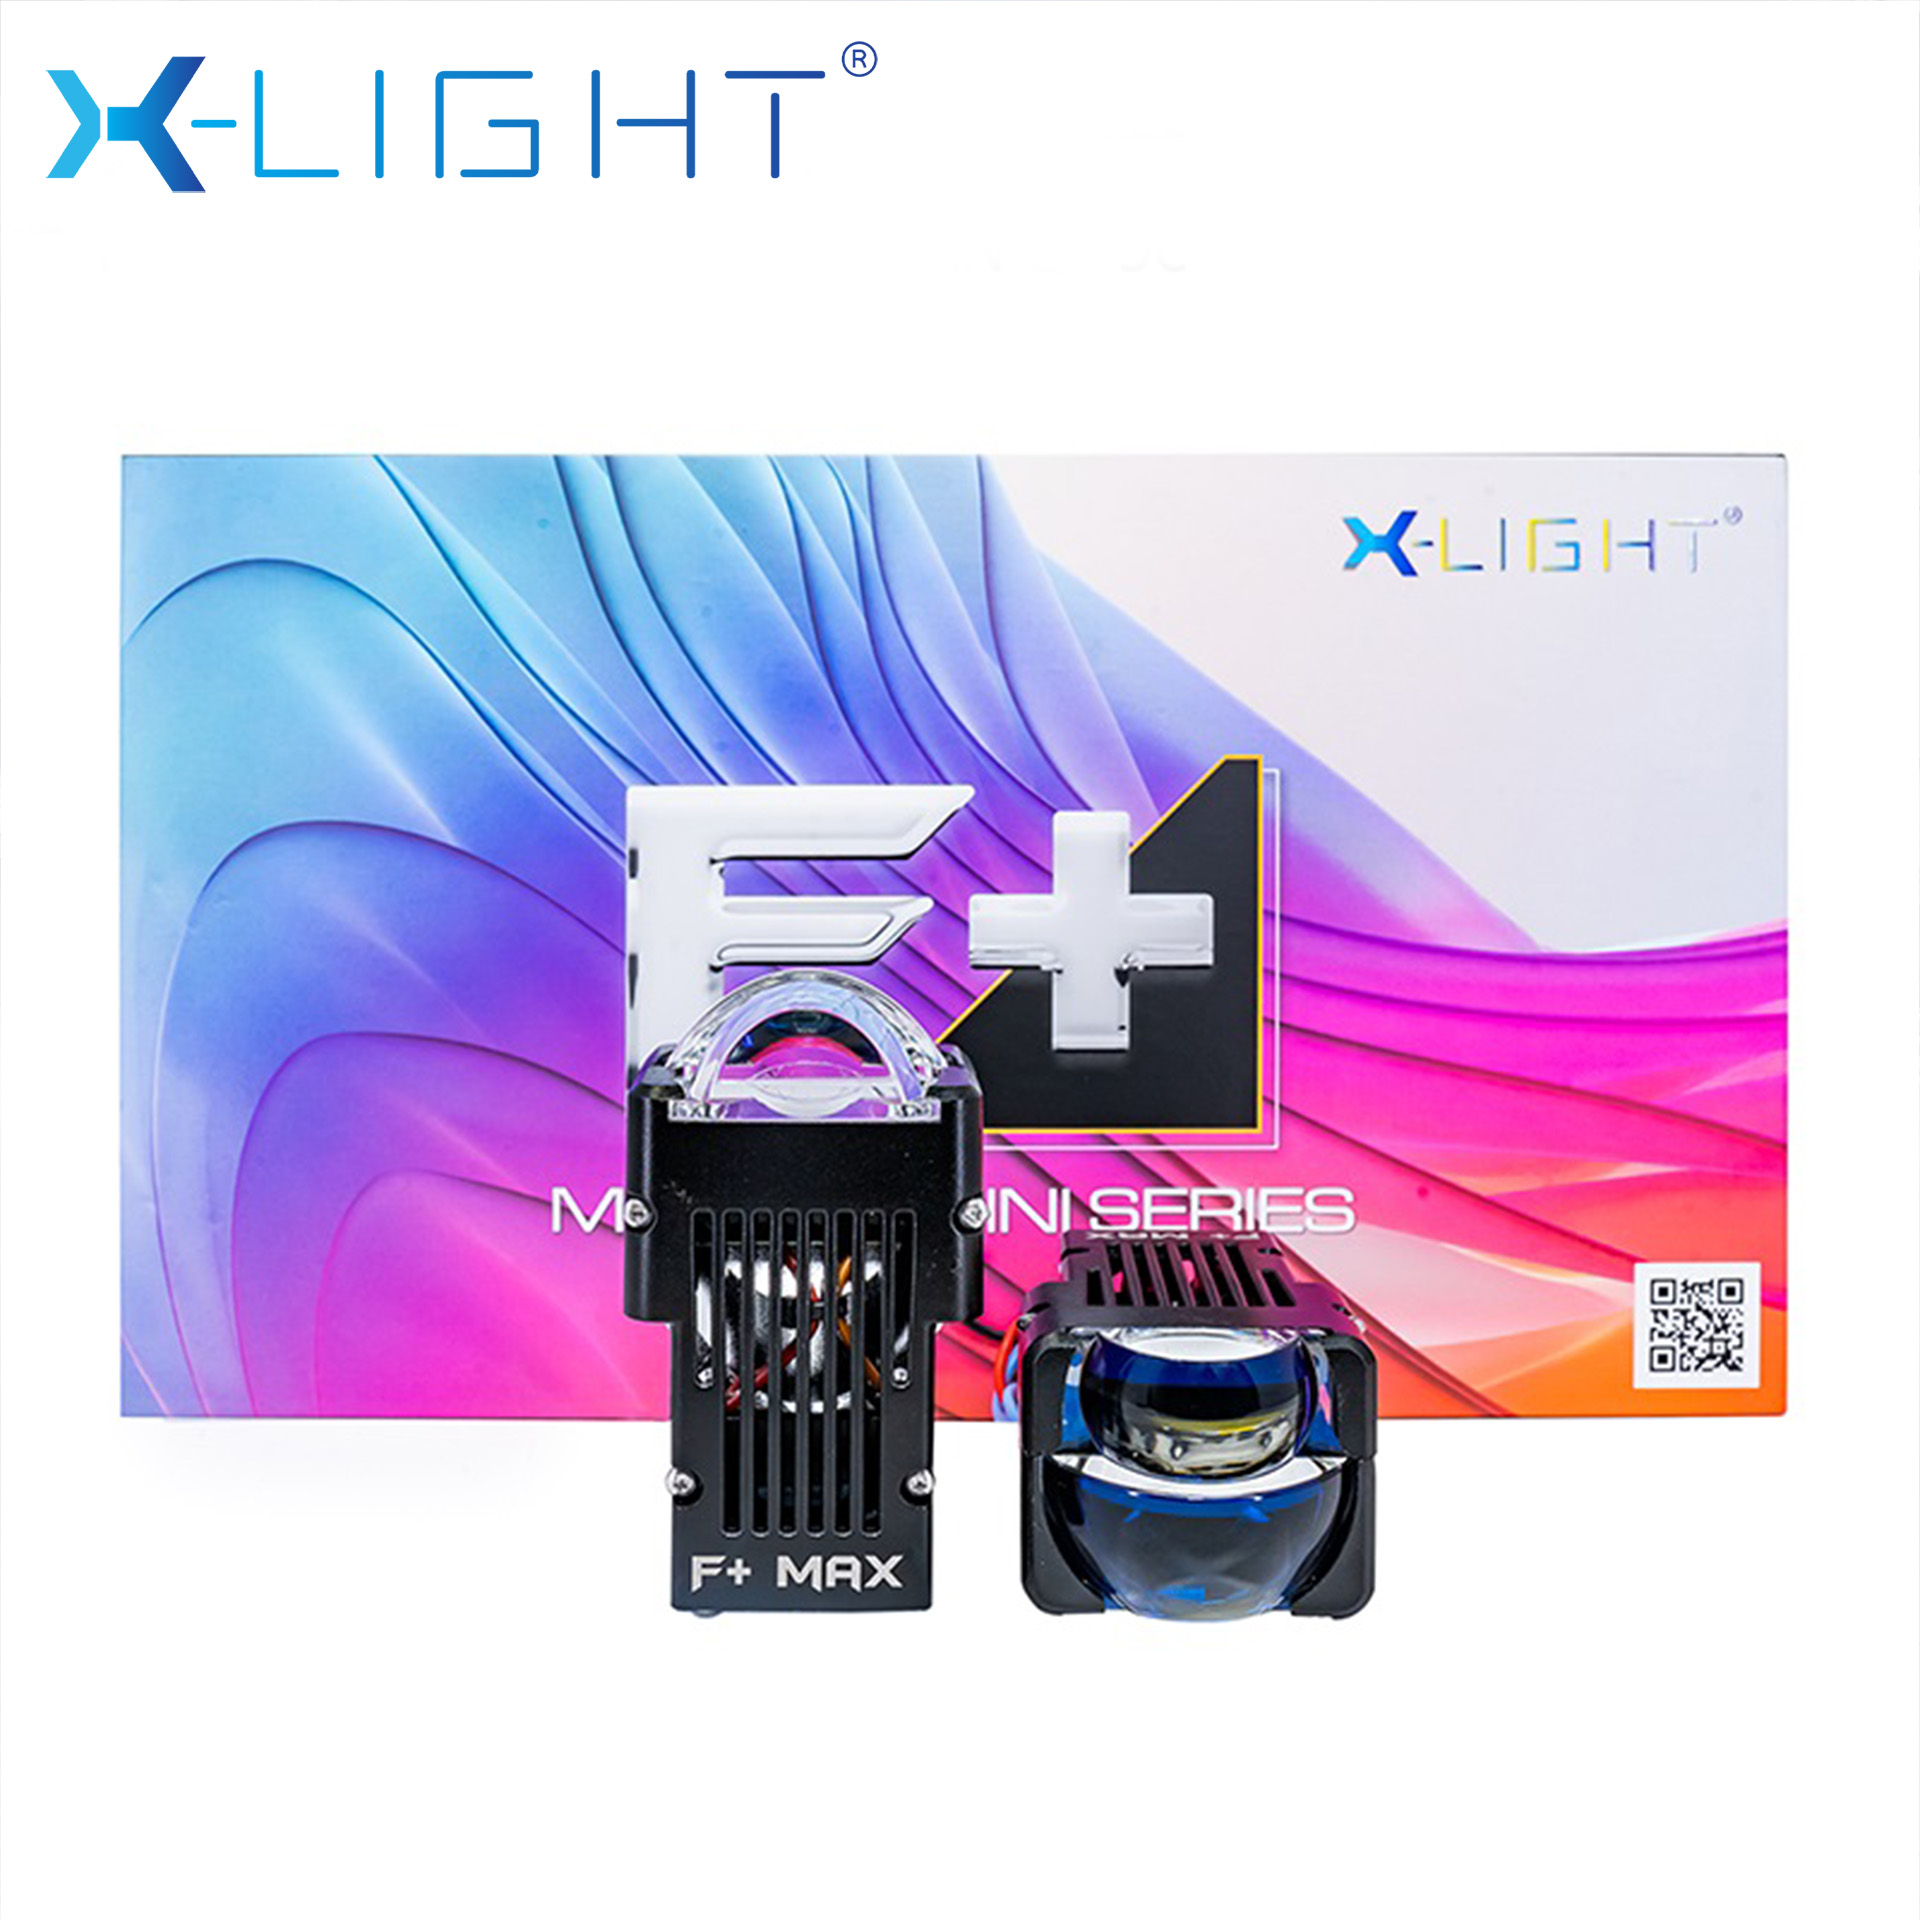 MODULE BI LED MINI X-LIGHT F+ MAX